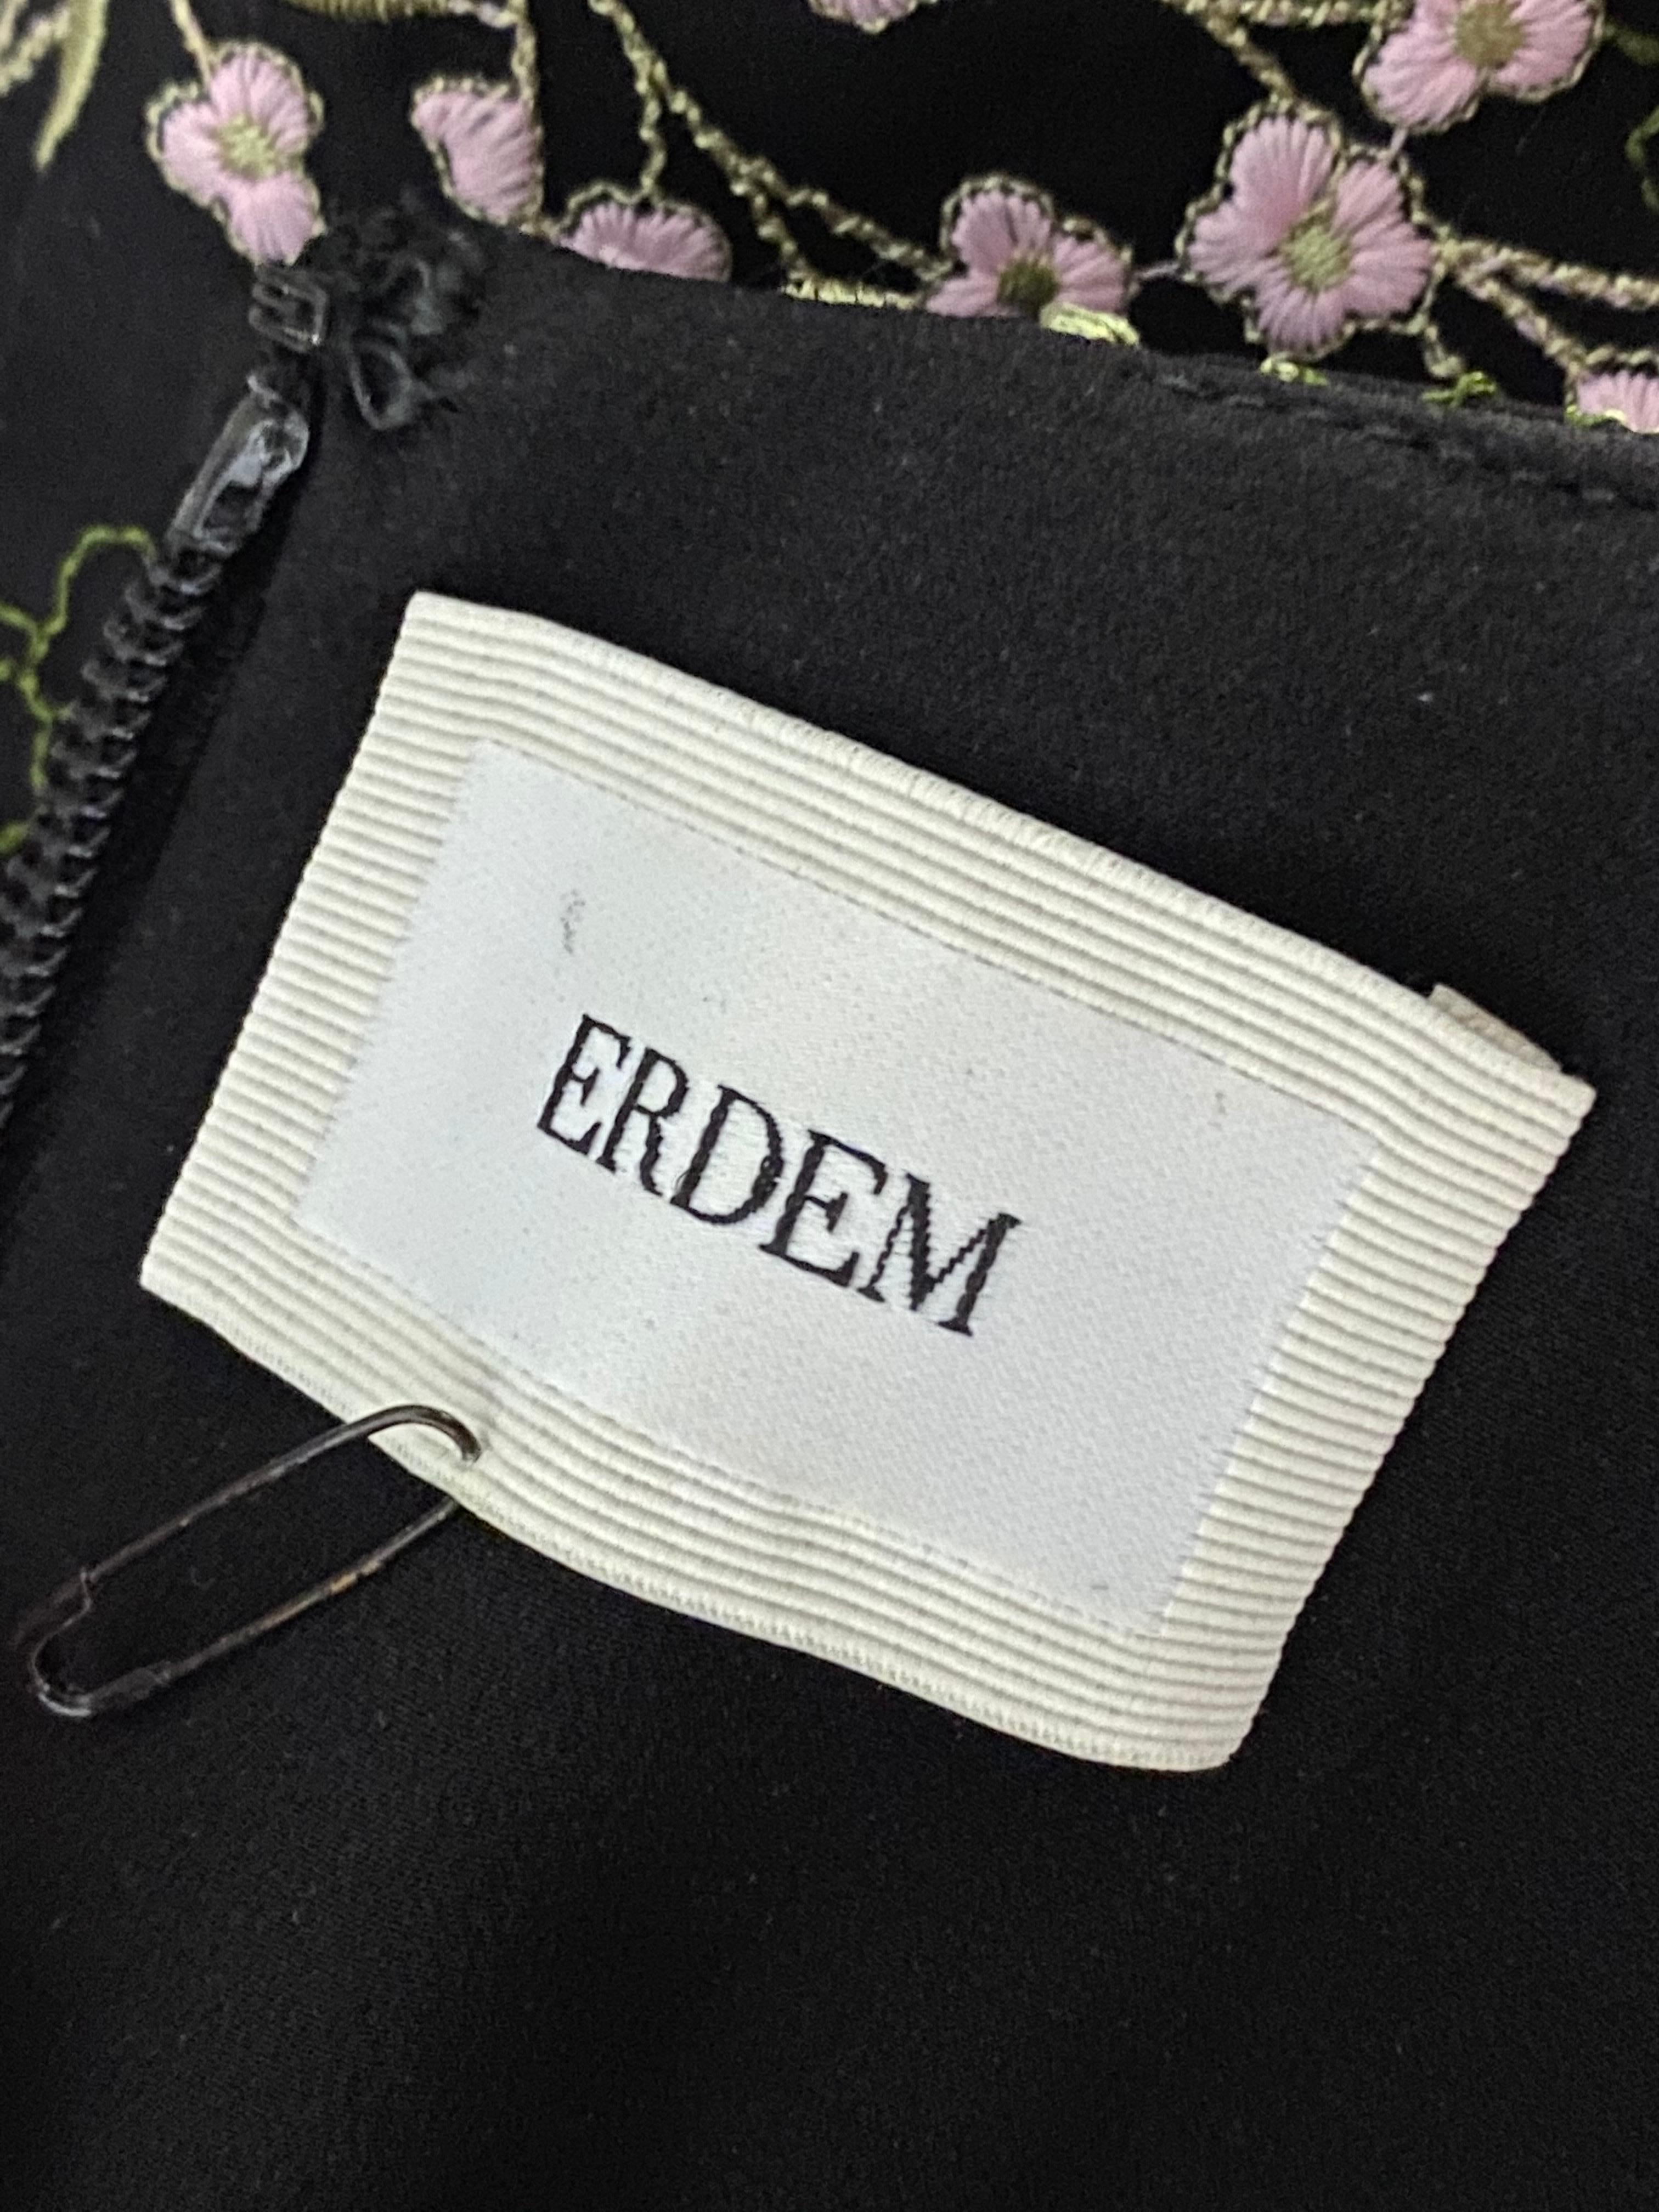 Erdem Black Silk and Floral Pattern Evening Dress Size 8 For Sale 1